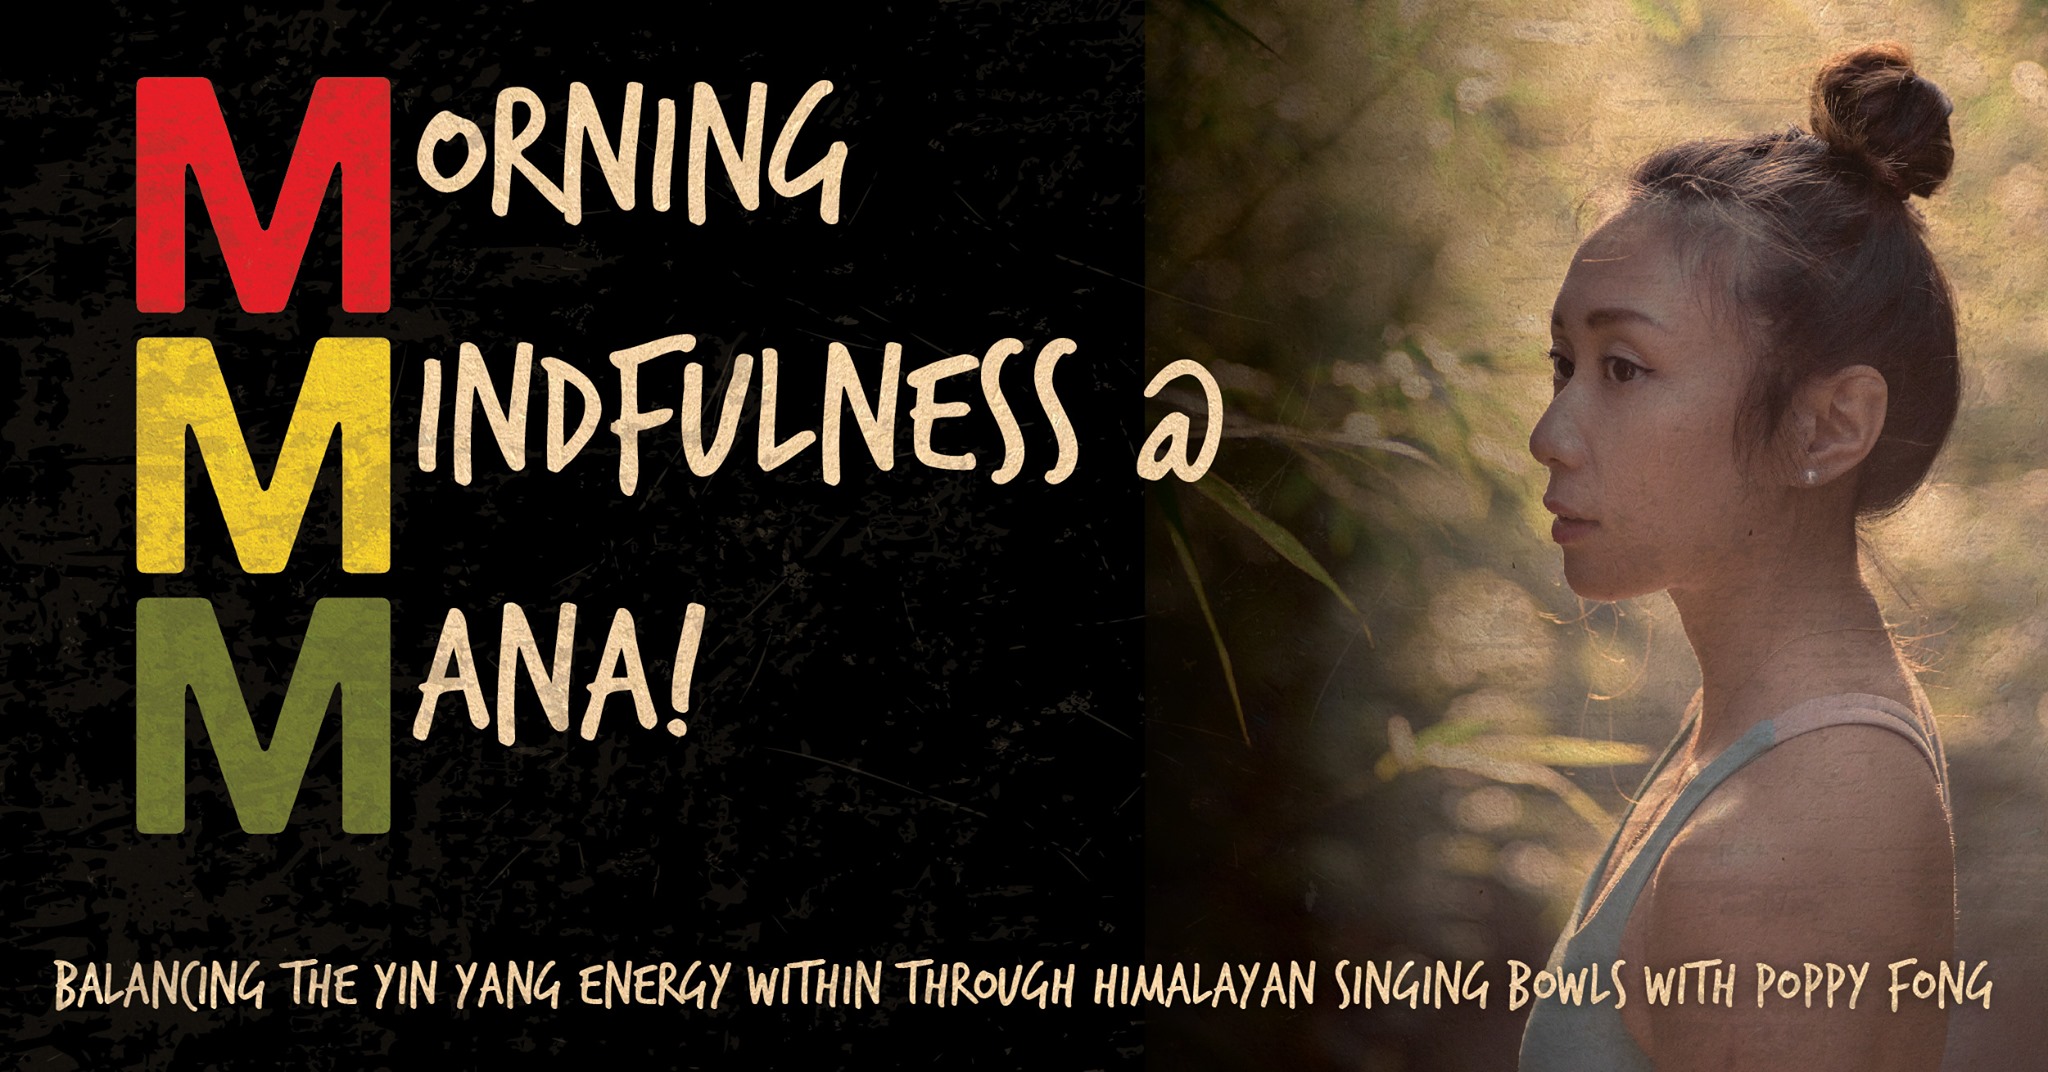 morning mindfulness mana poppy fong hong kong